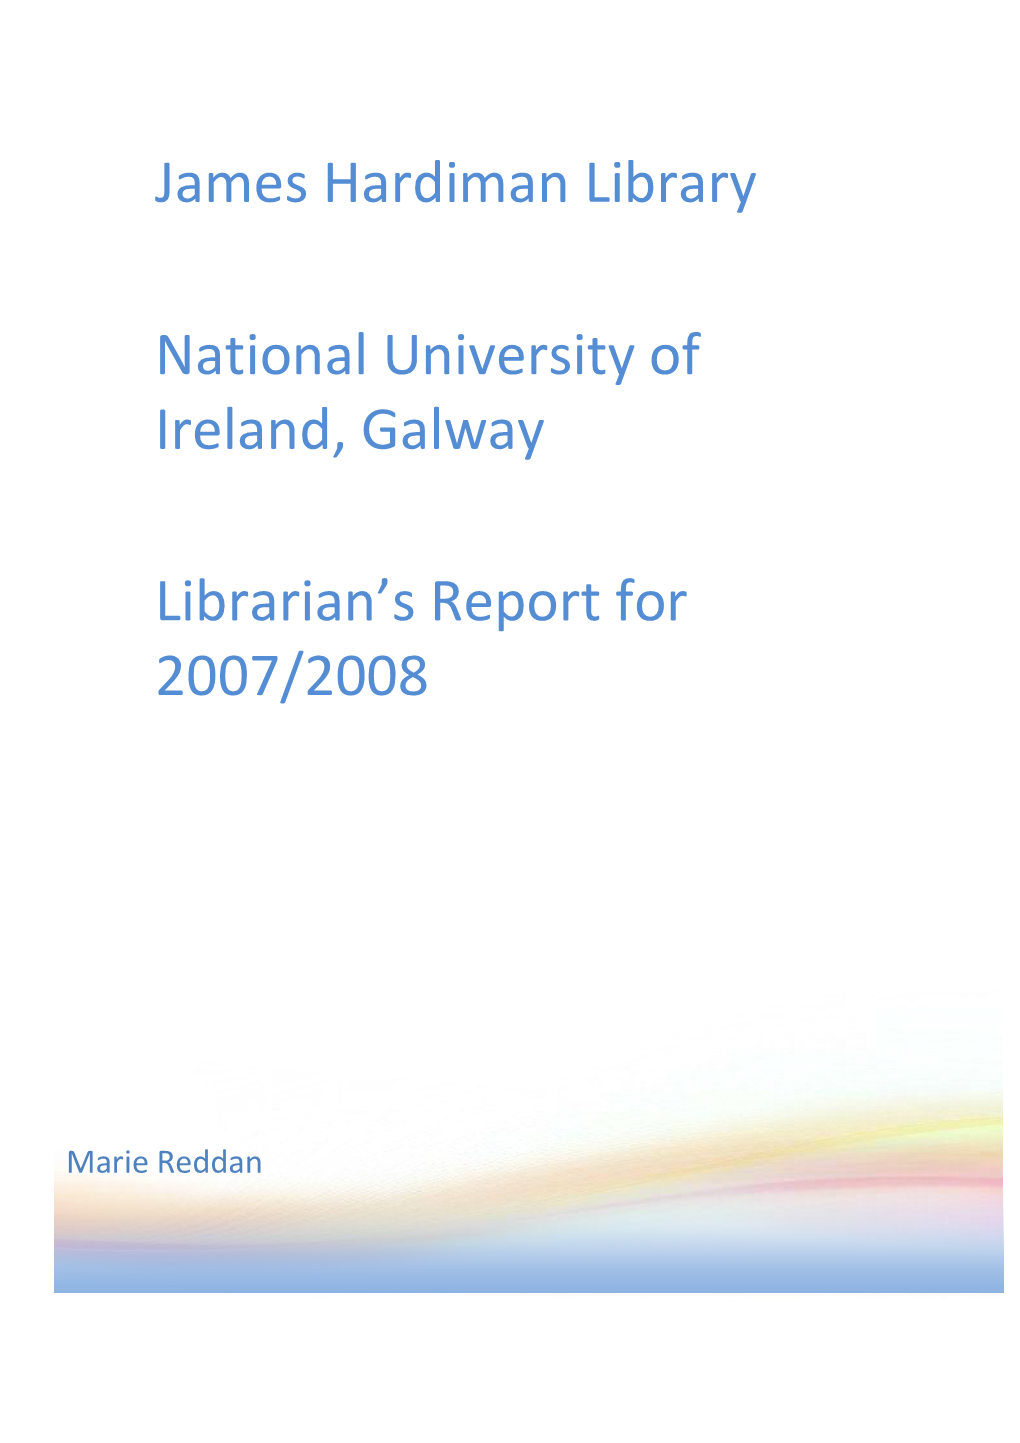 James Hardiman Library National University of Ireland, Galway